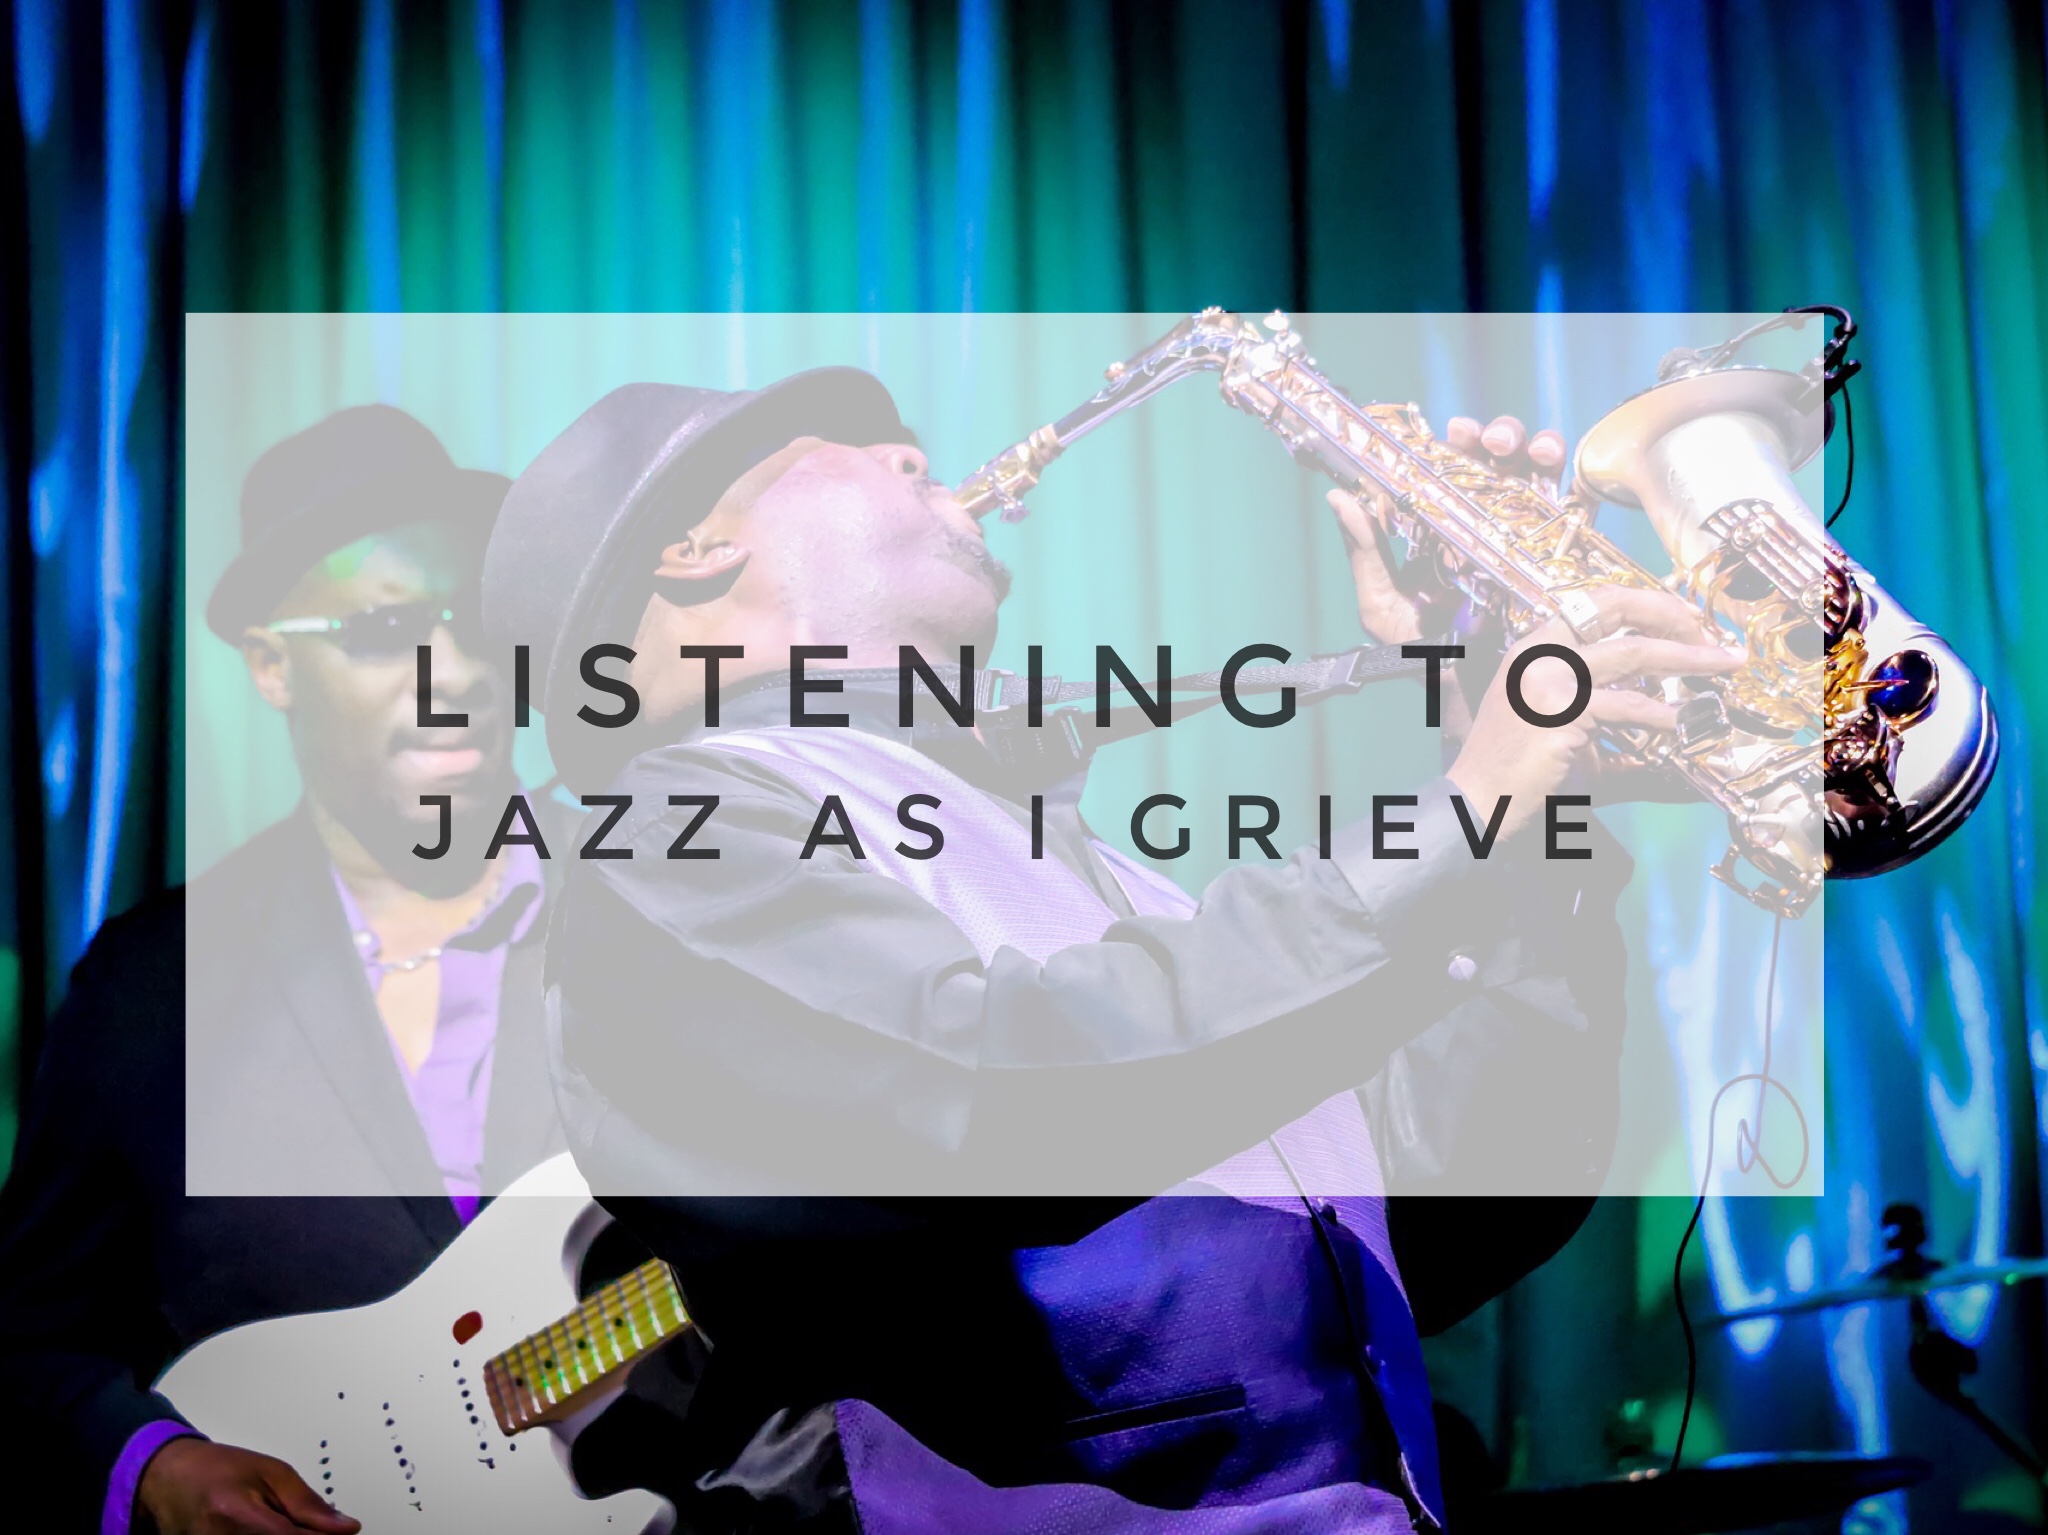 Listening to jazz as I grieve